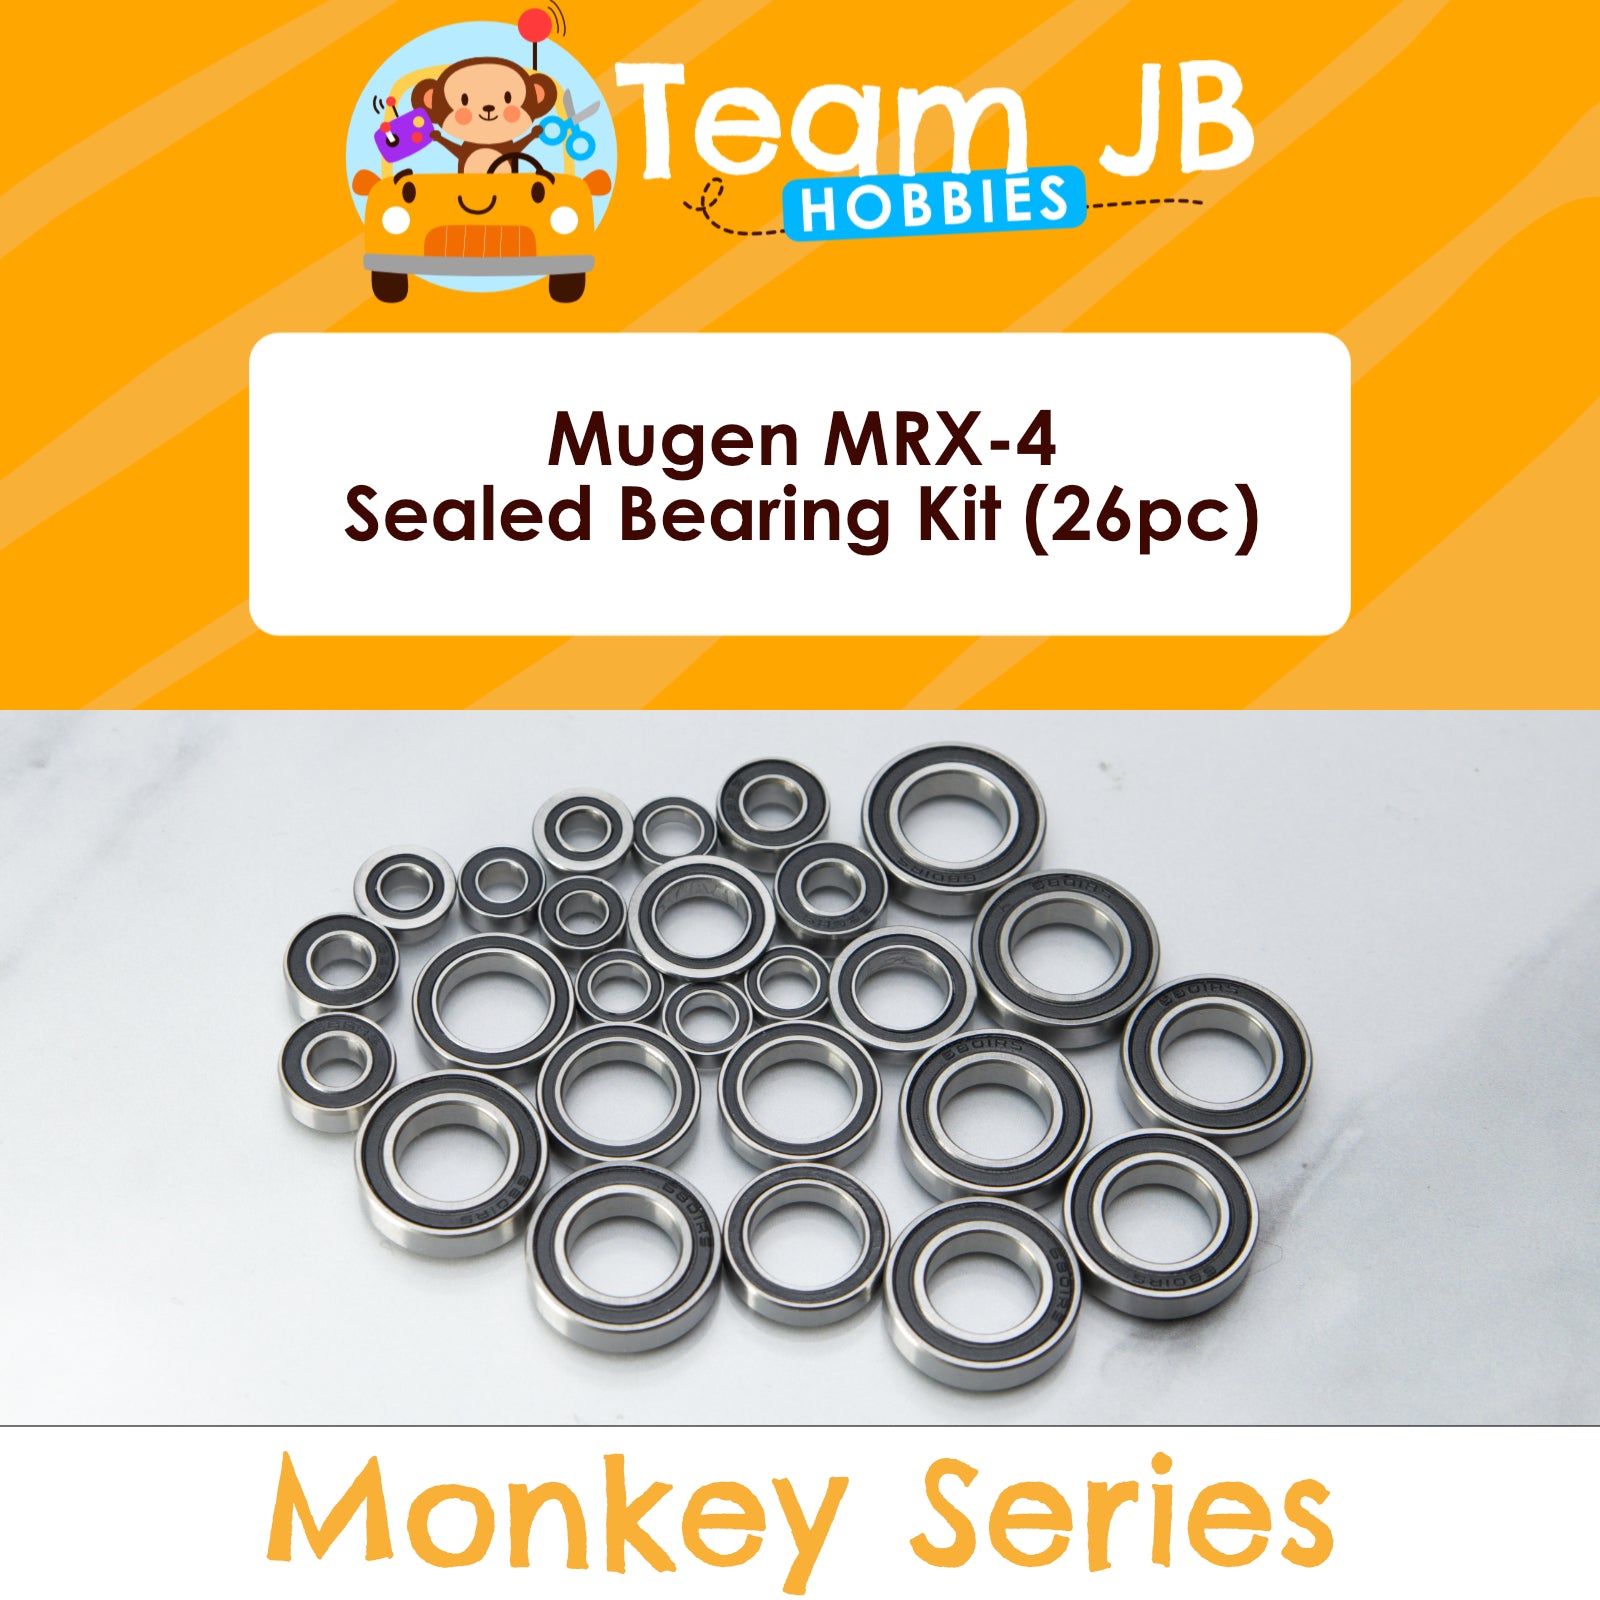 Mugen MRX-4 - Sealed Bearing Kit